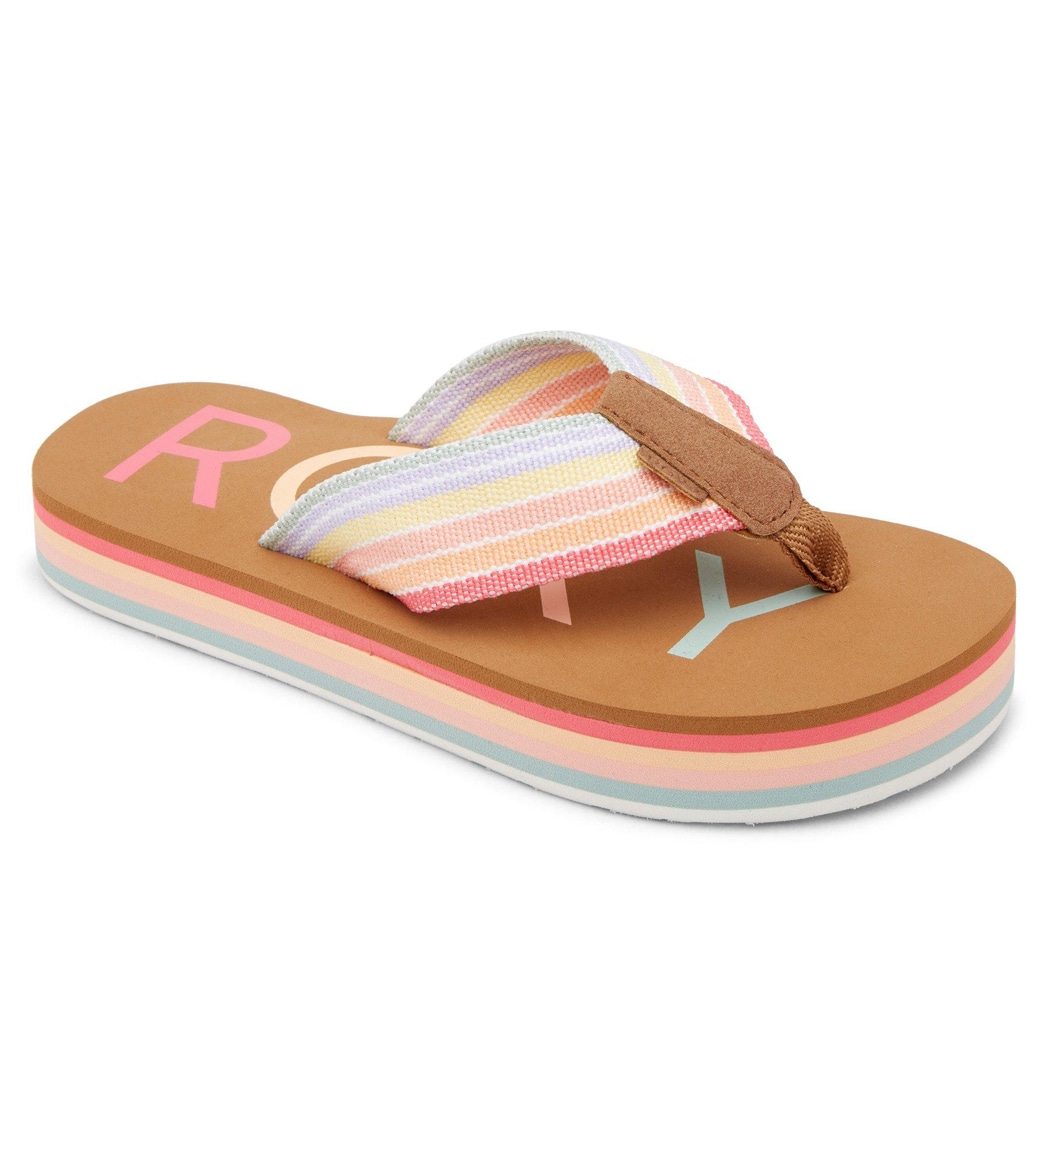 Roxy Girls' Rg Chika Hi Flip Flop - Multi 11 100% Rubber - Swimoutlet.com